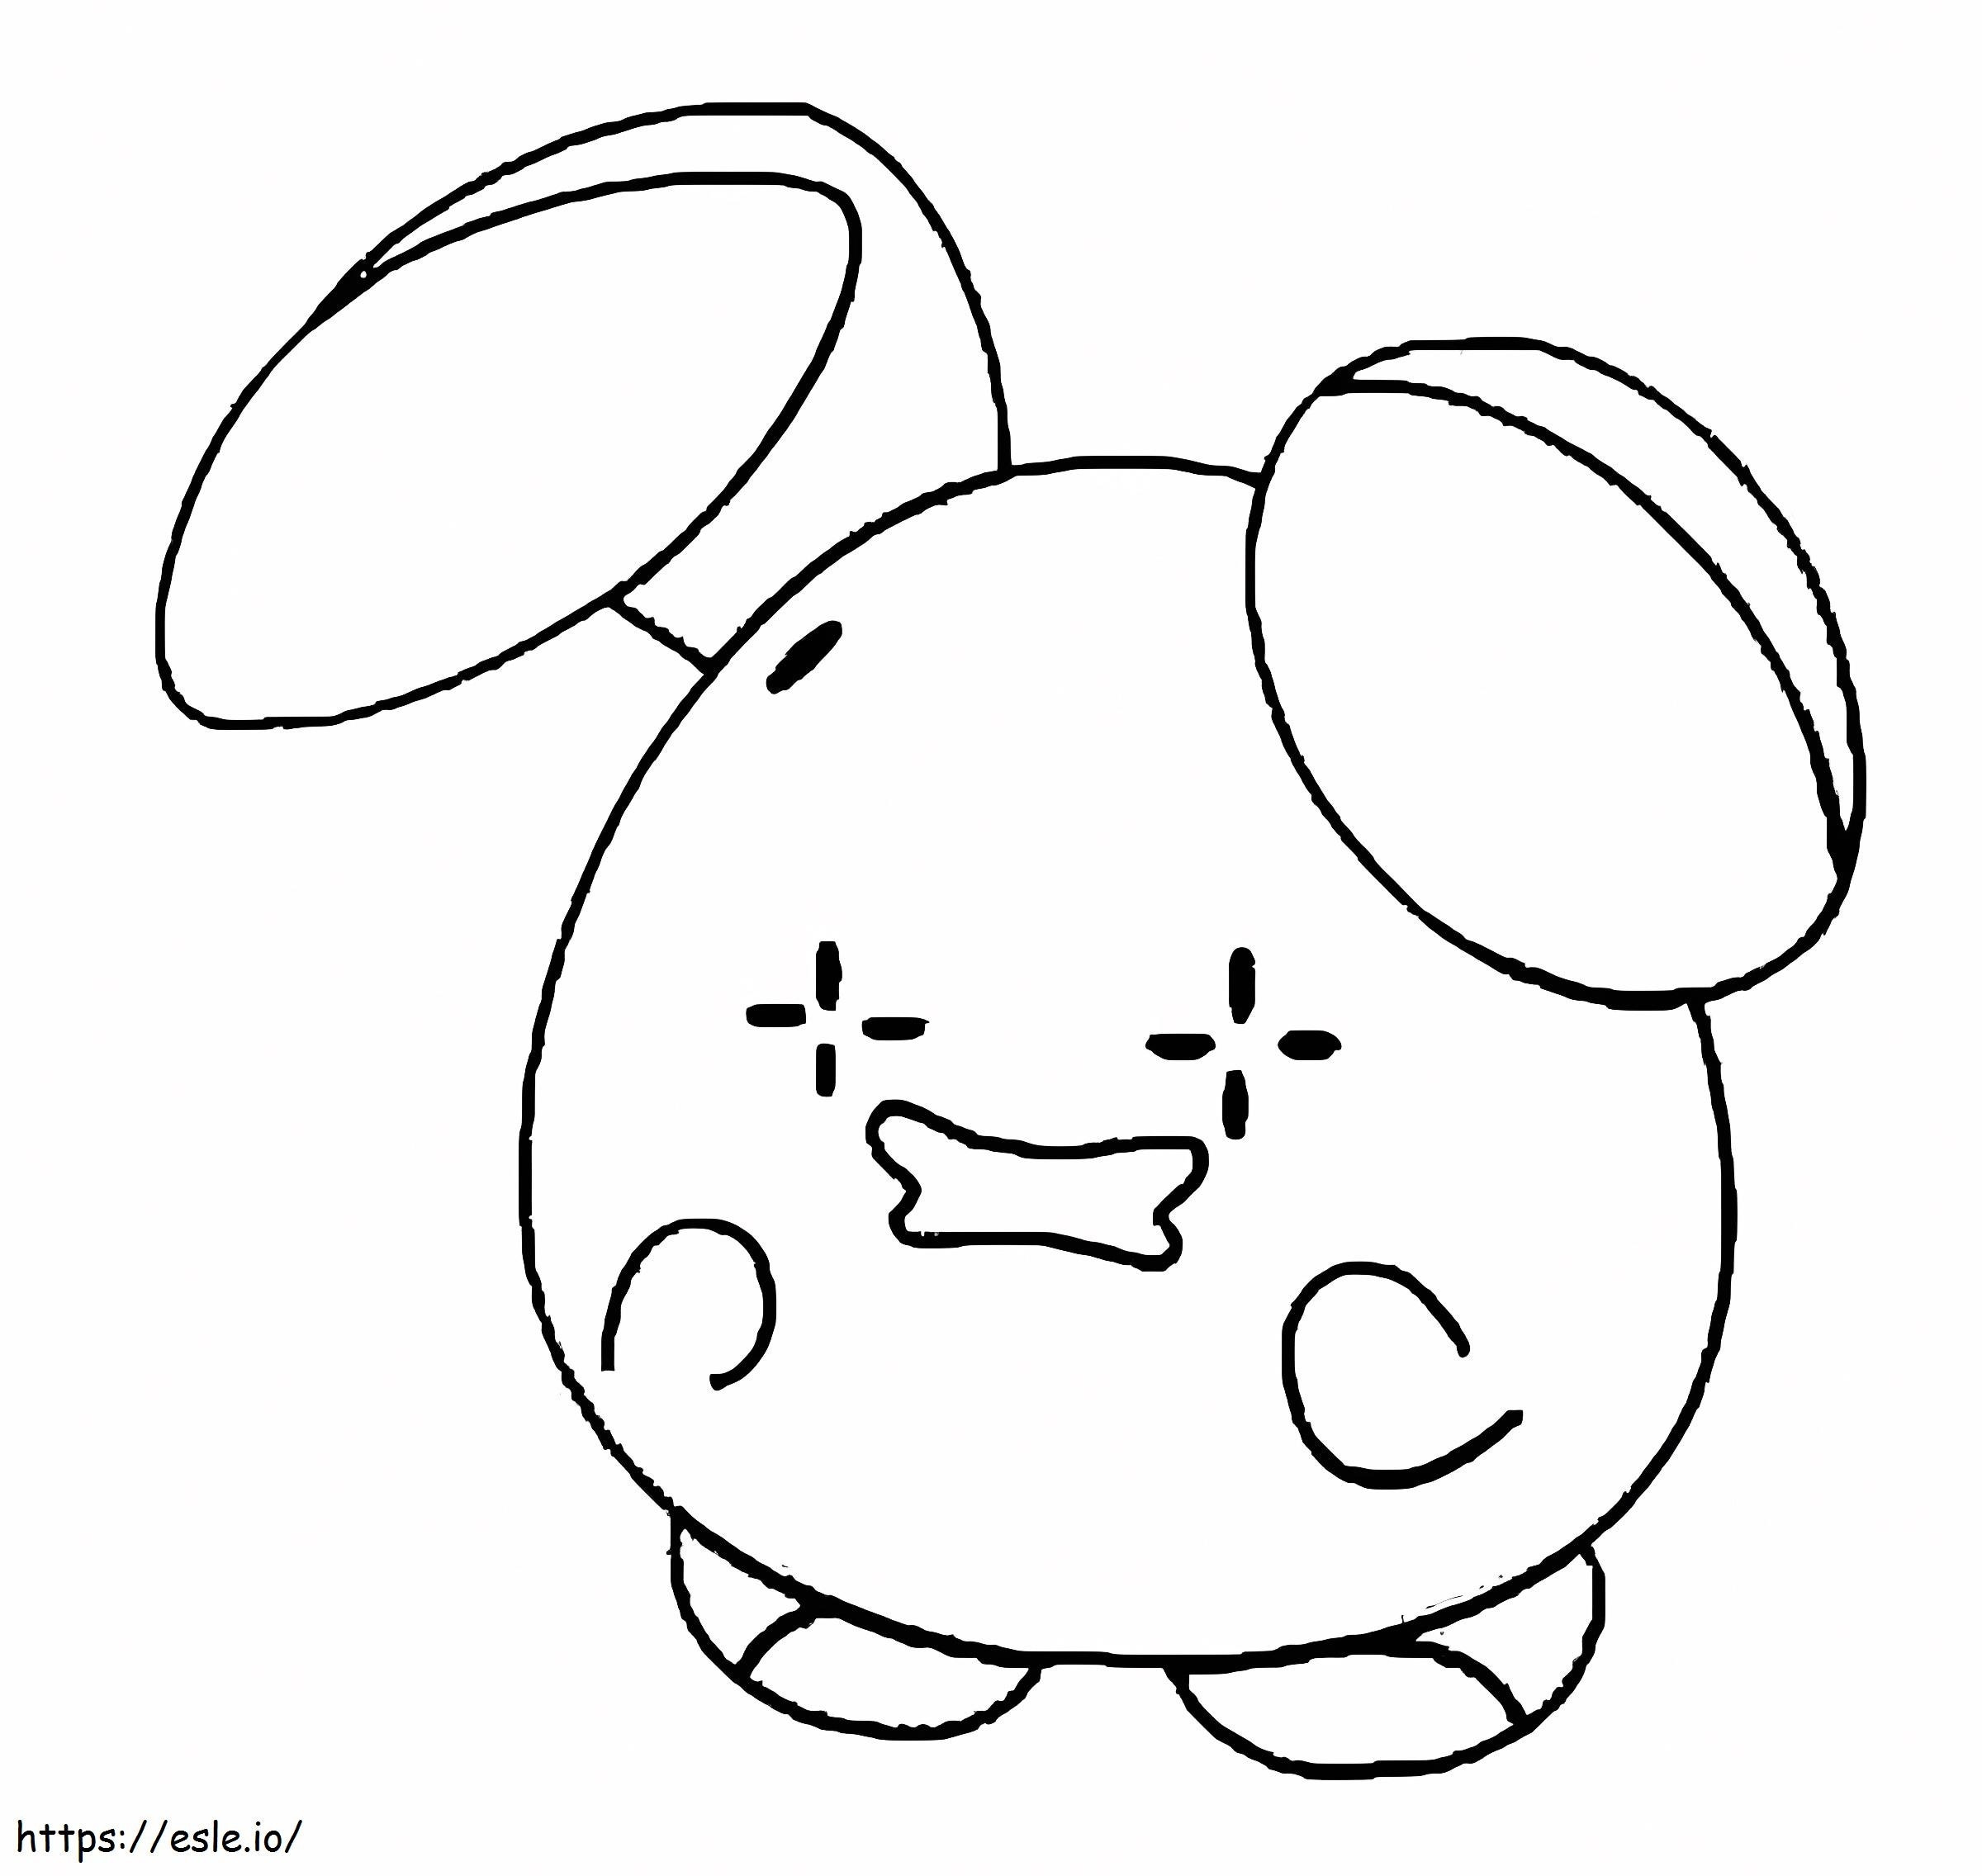 Whismur Gen 3 Pokemon coloring page